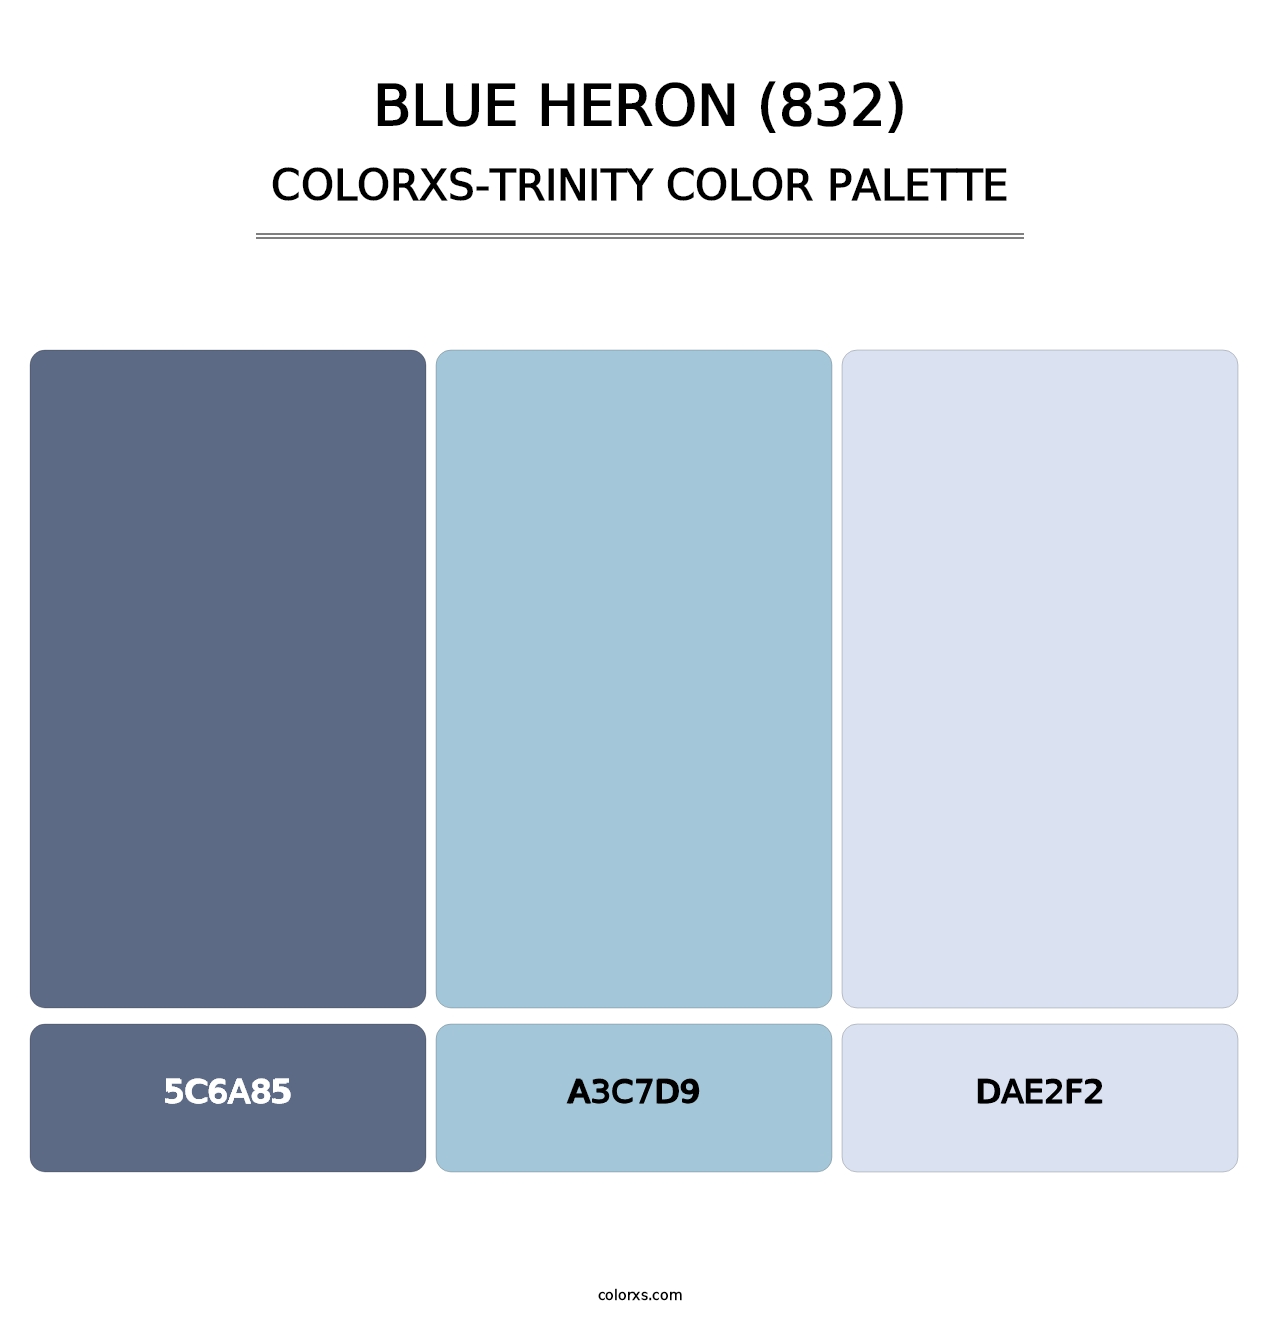 Blue Heron (832) - Colorxs Trinity Palette